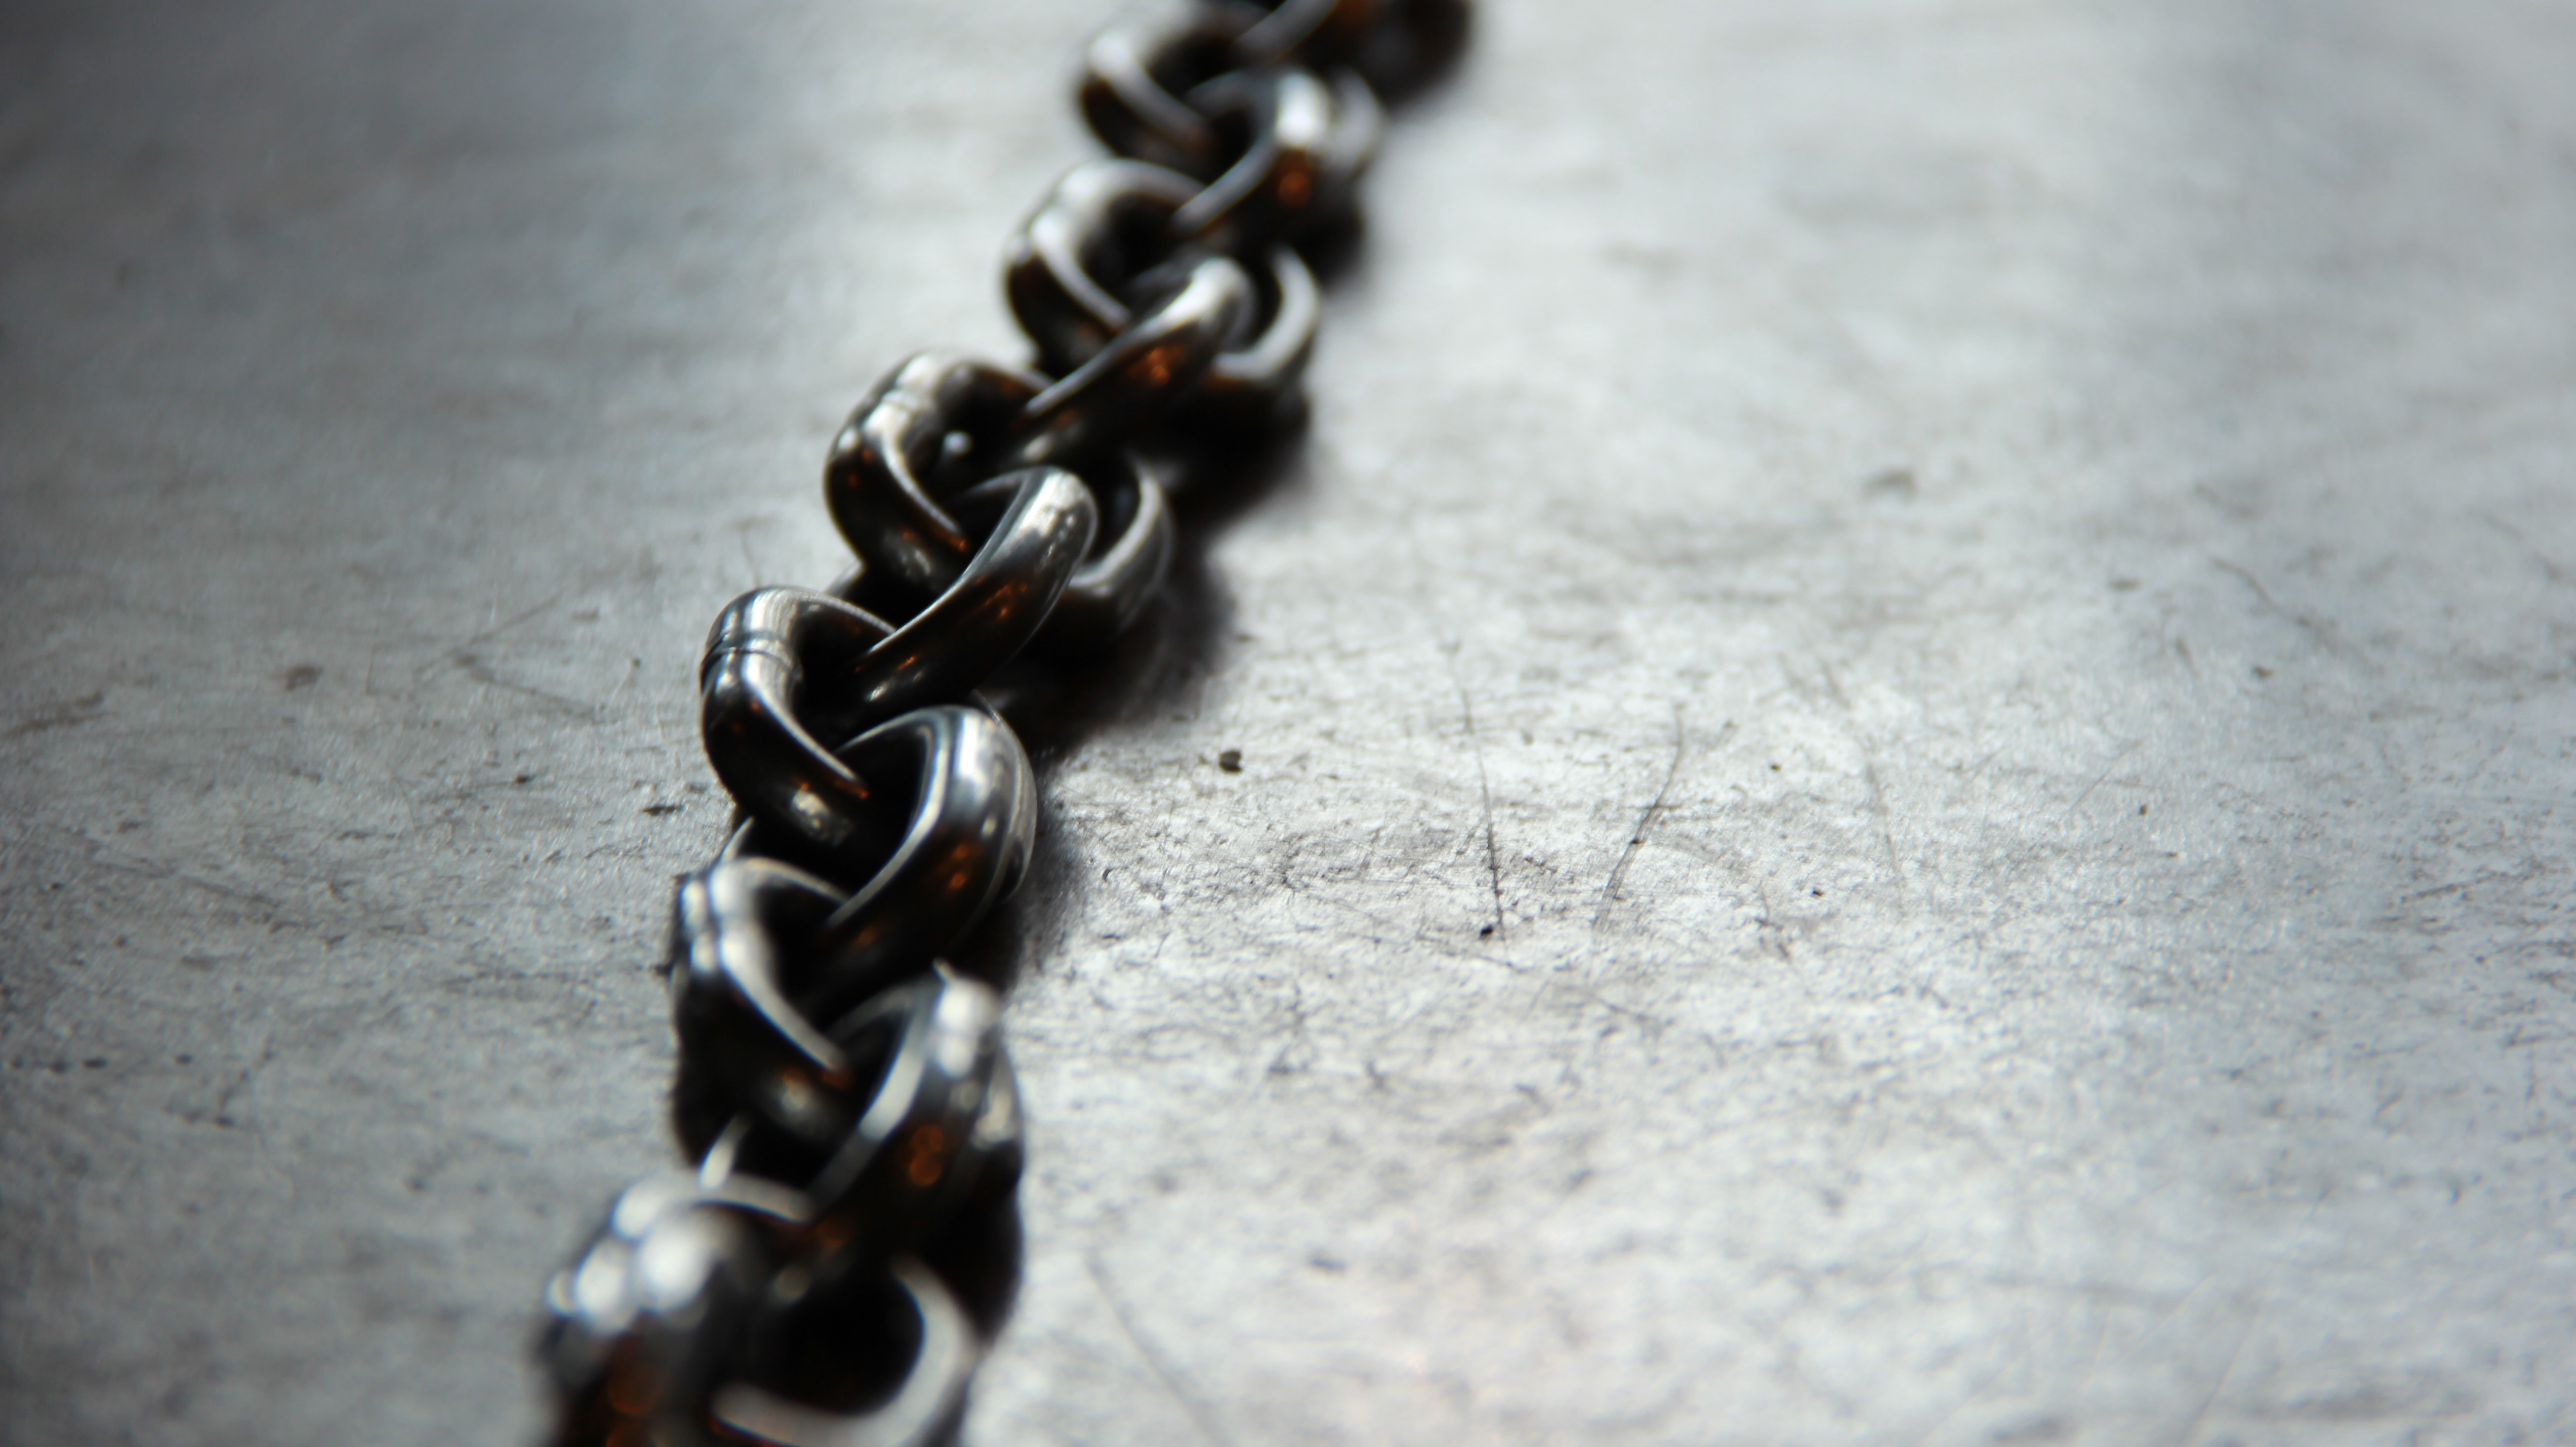 welded chain ordinary mild steel chain